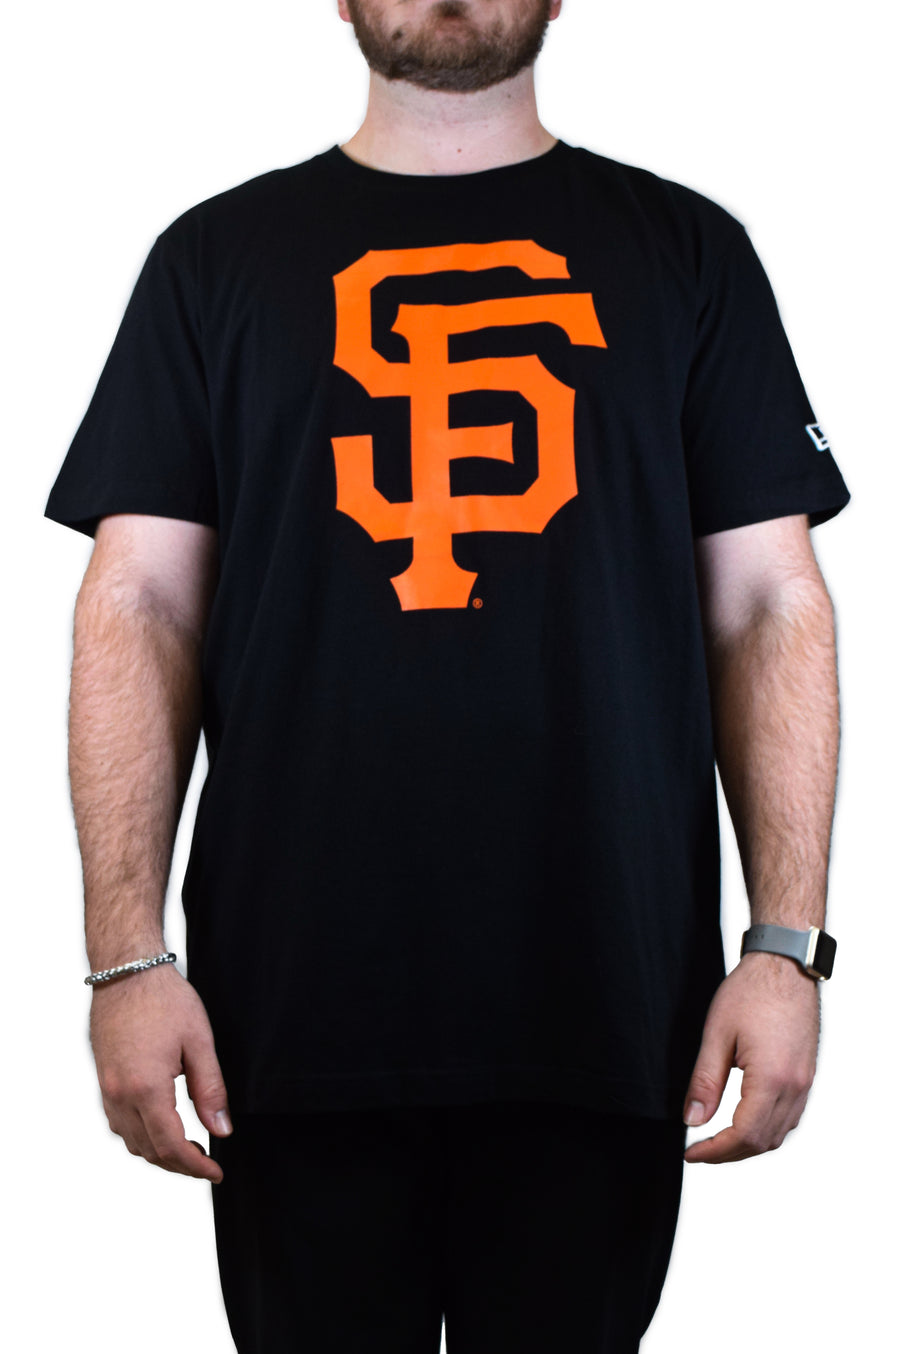 New Era San Francisco Giants Classic Logo Shirt - Black